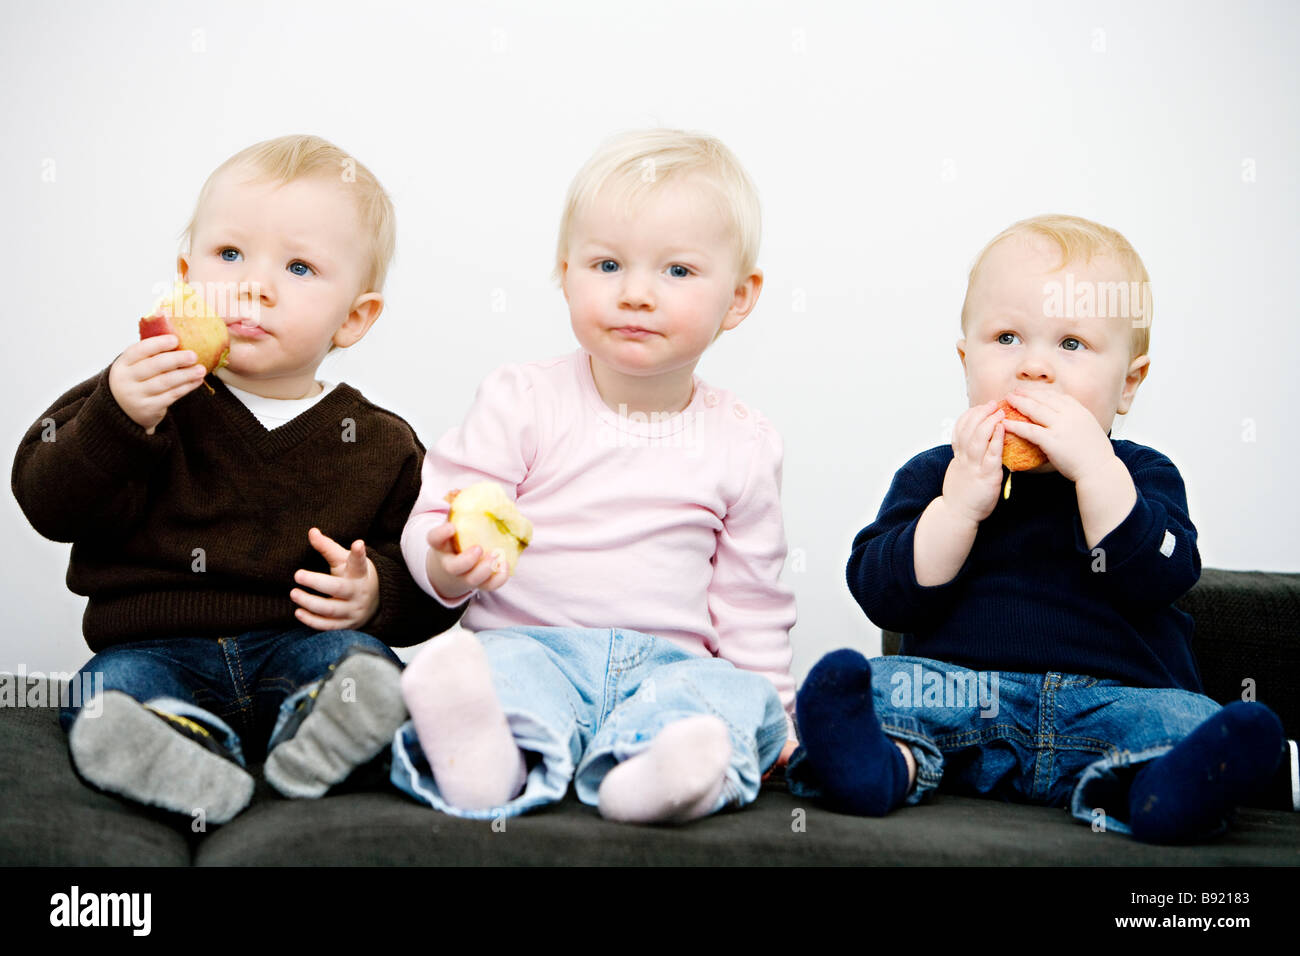 Three children holding apples Sweden. Stock Photo